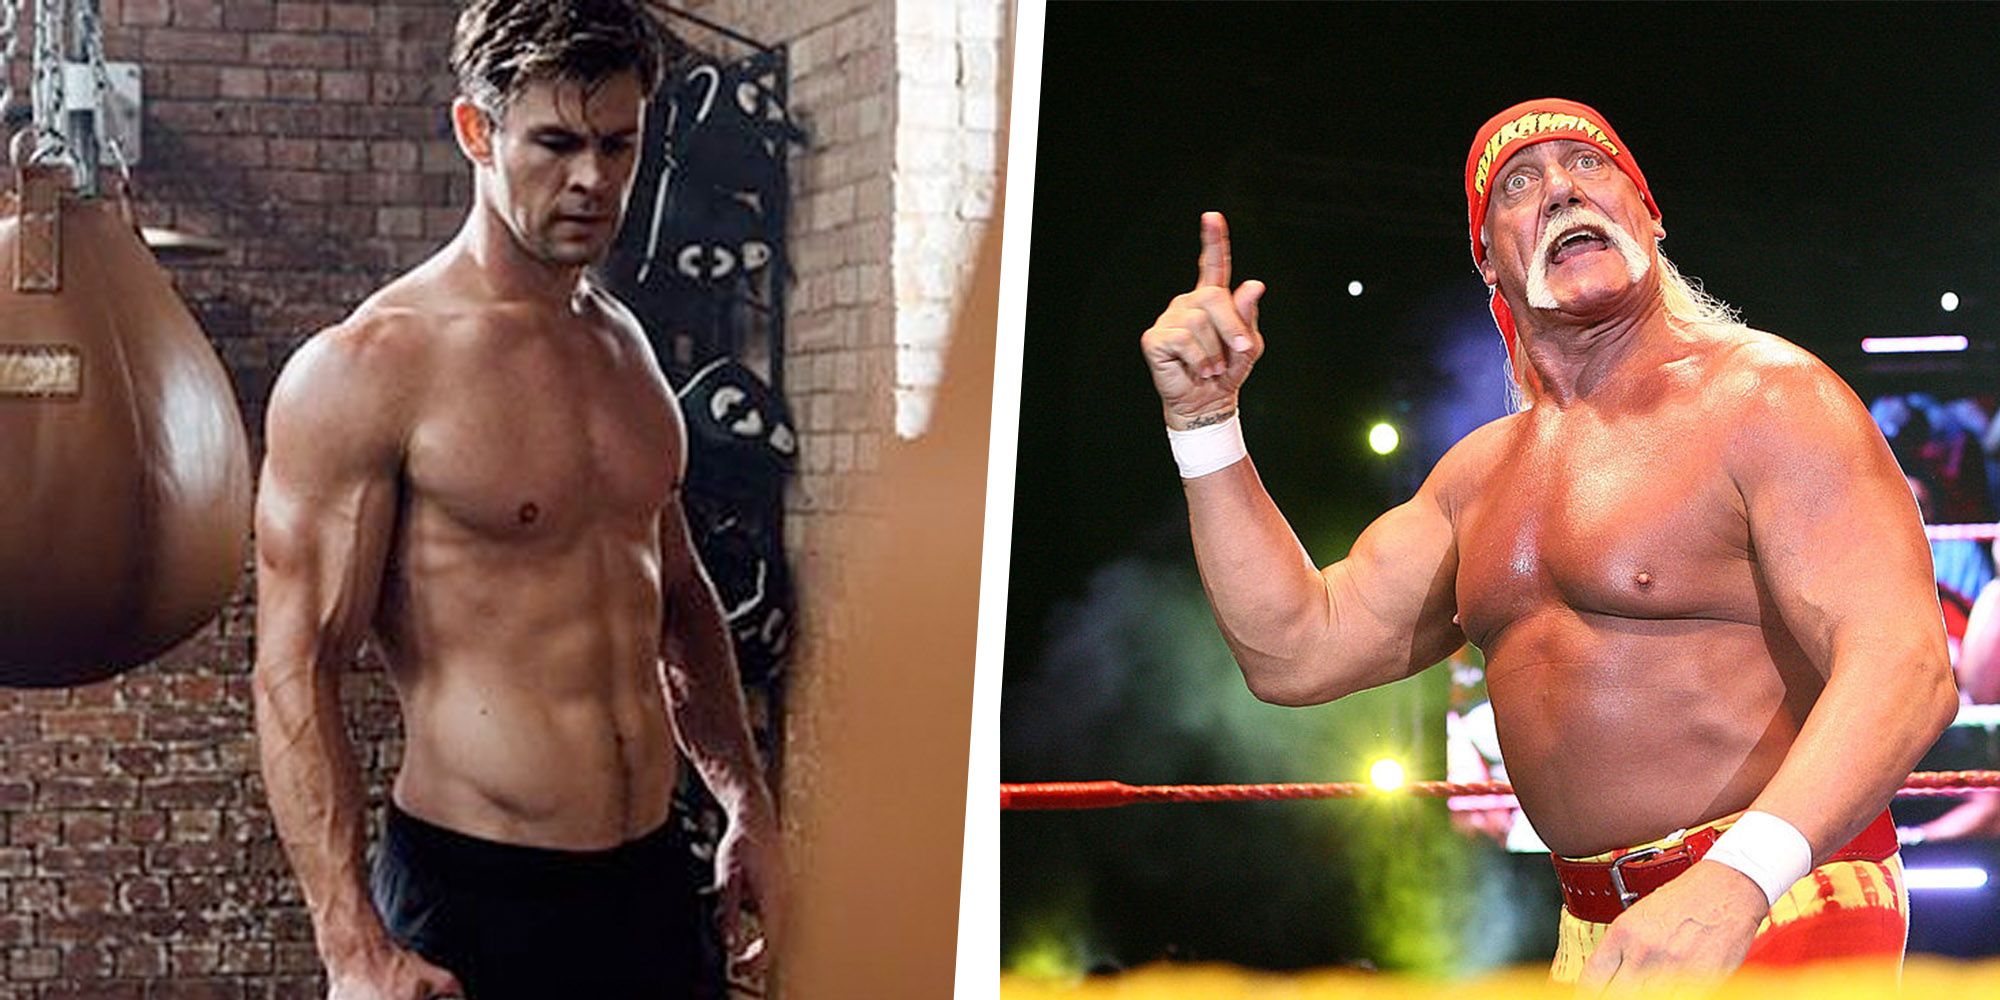 Chris Hemsworth Is About Start a Huge Transformation to Star Hulk Hogan in Netflix Wrestling Biopic